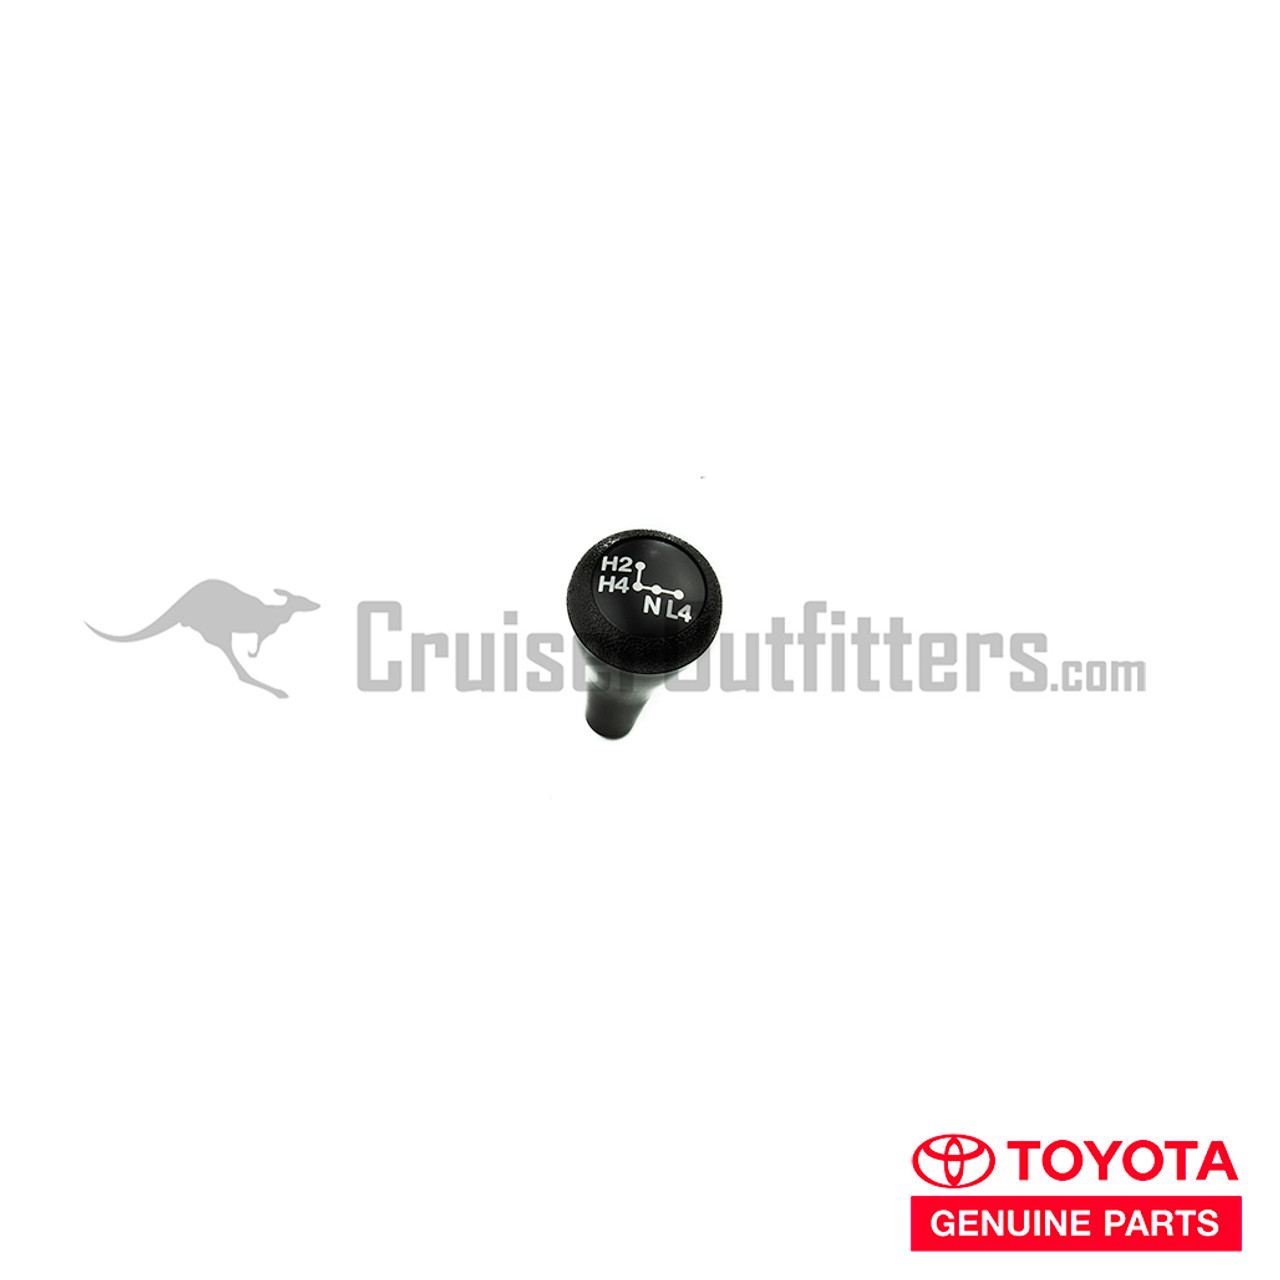 Transfer Case Shift Knob - OEM Toyota - Fits (INT60020)